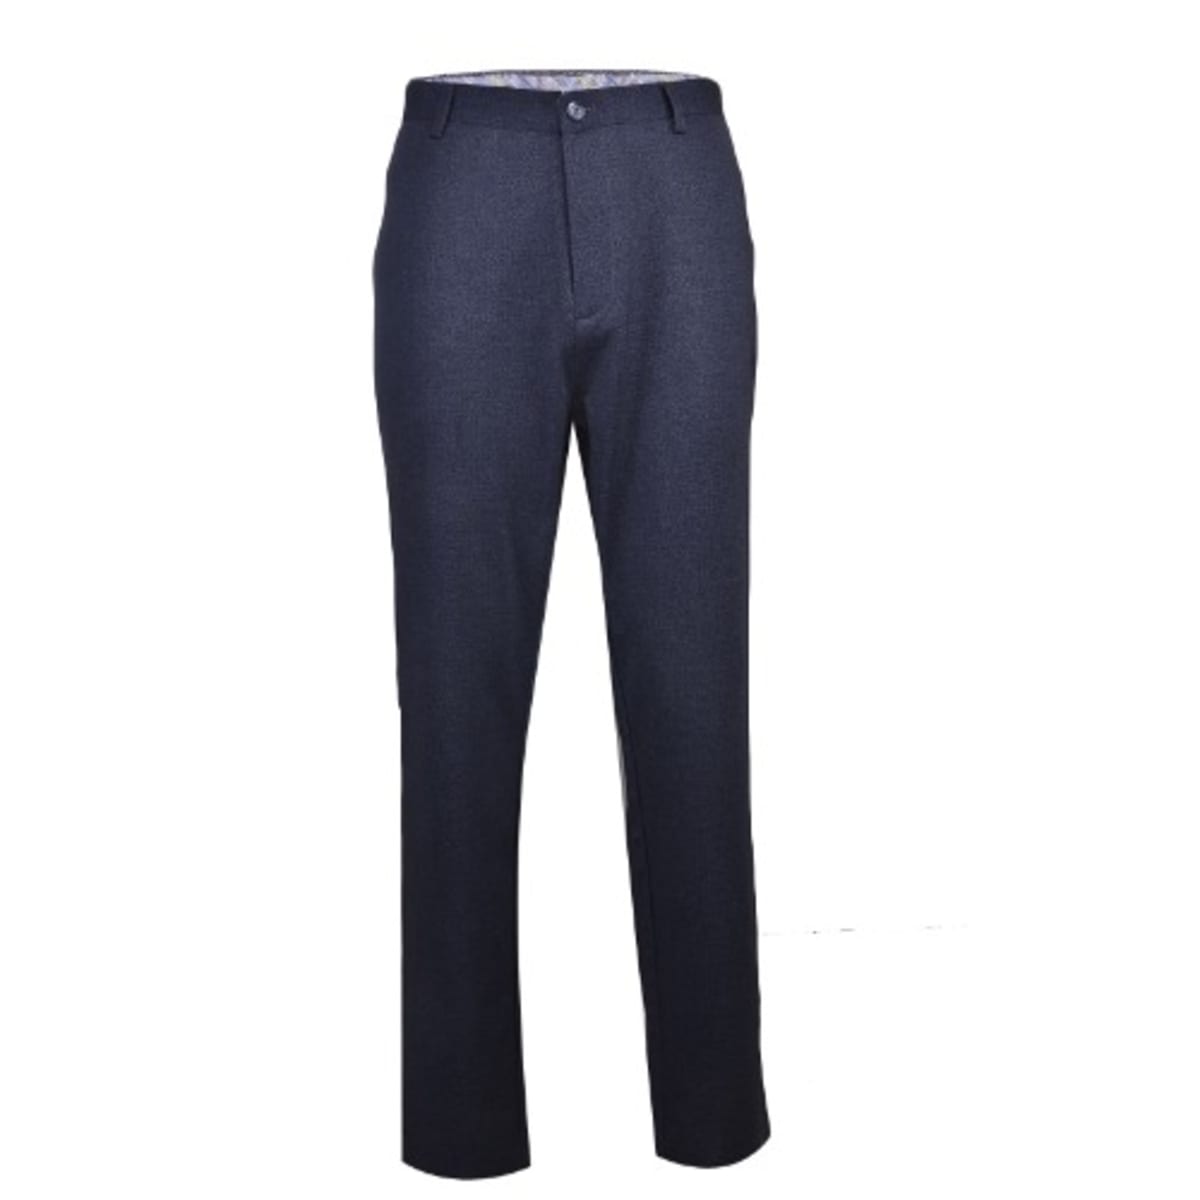 Slim Fit Suit trousers - Dark grey marl - Men | H&M IN-vachngandaiphat.com.vn